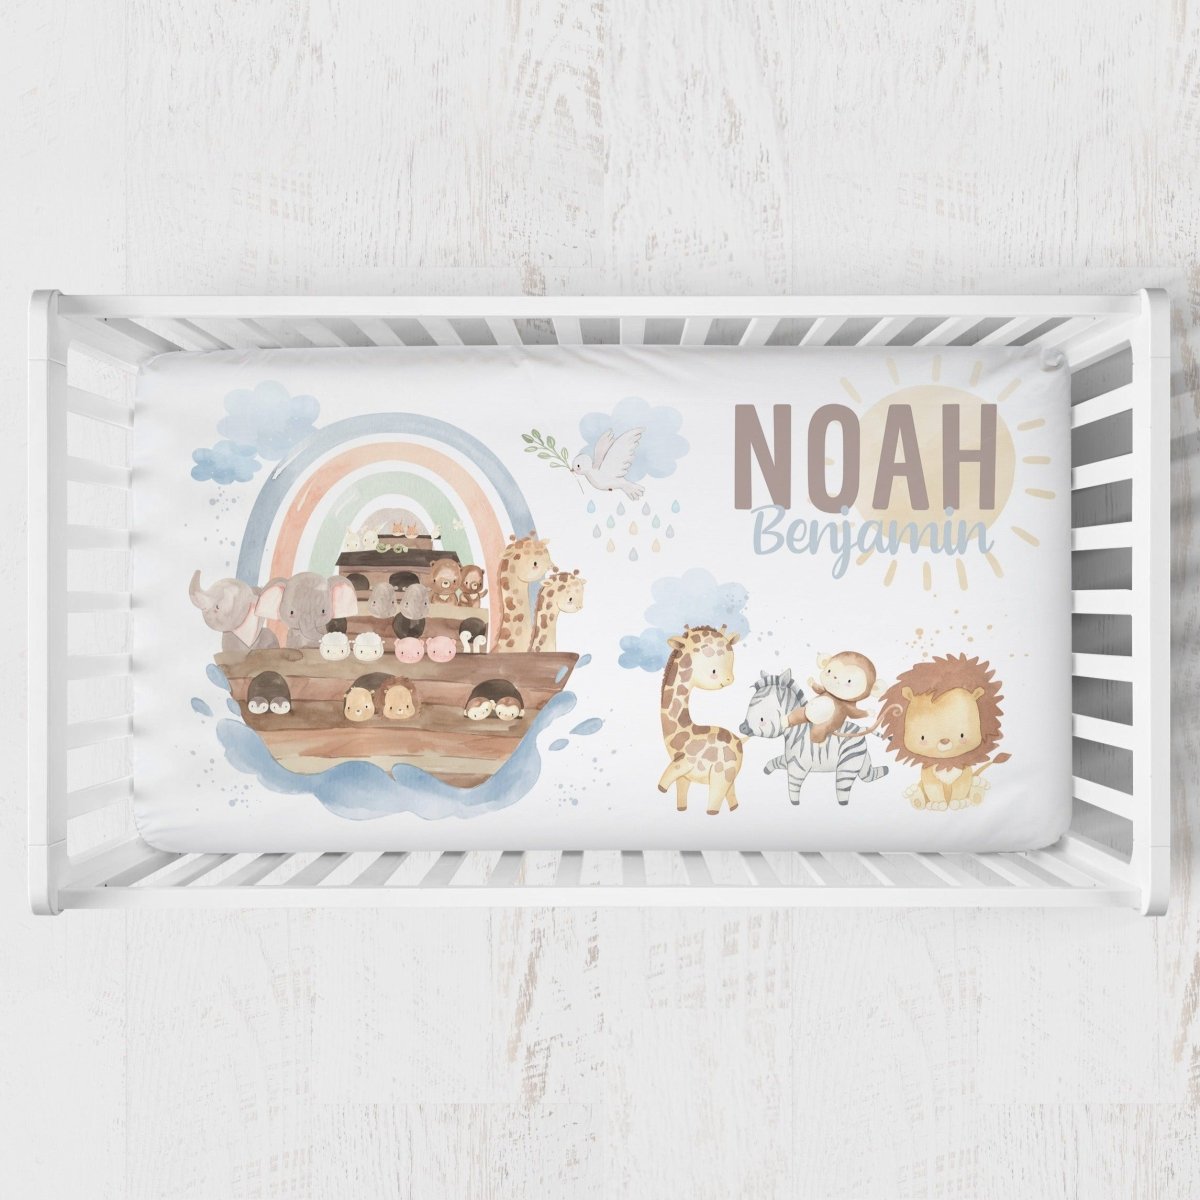 Noah's Ark Nursery Collection - gender_boy, Noah's Ark, text